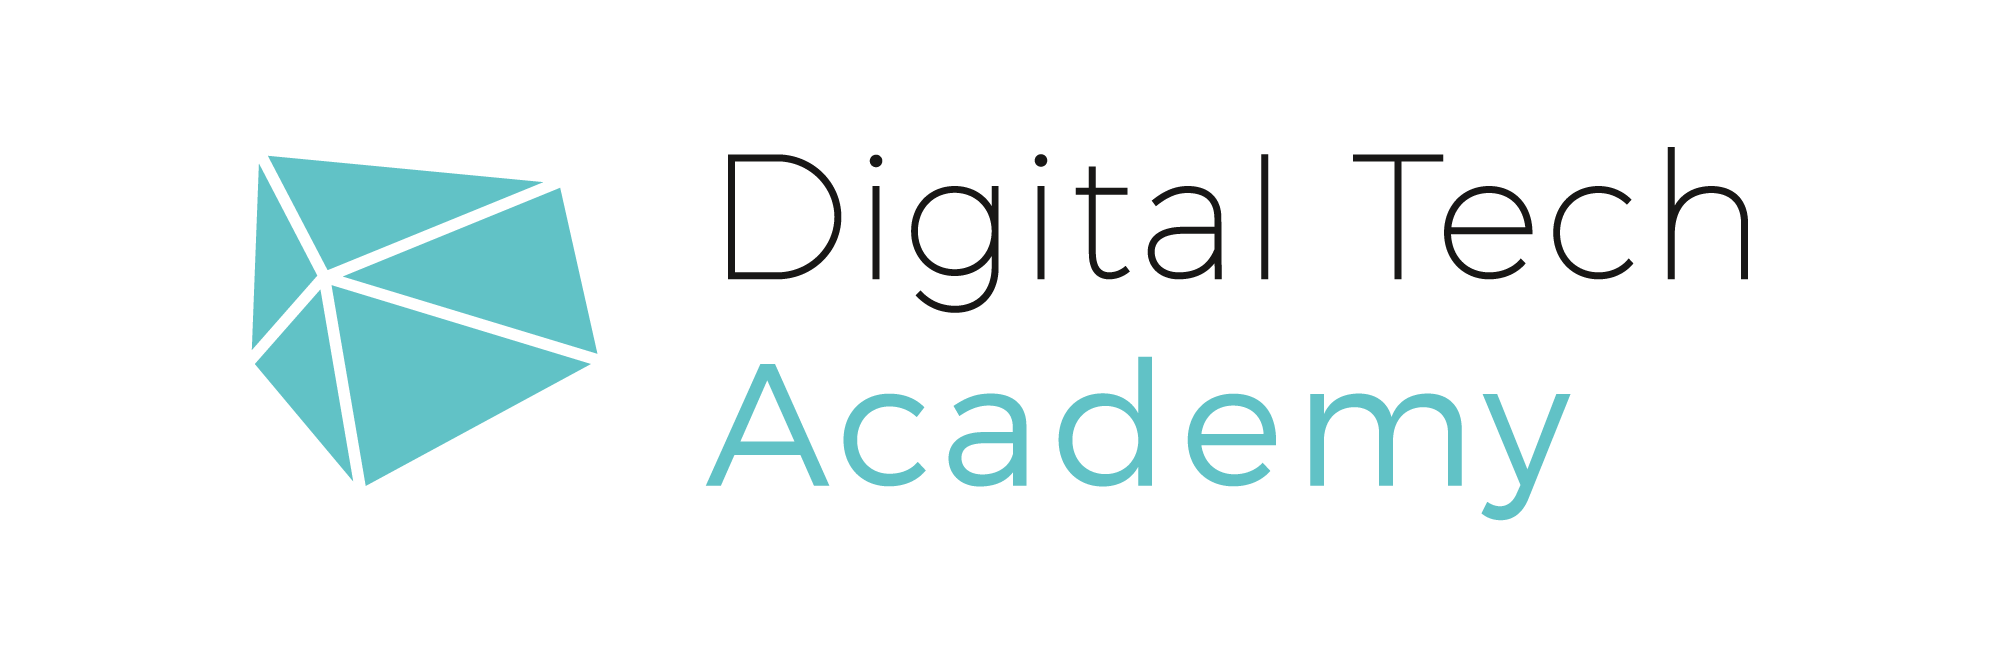 Digital Tech Academy